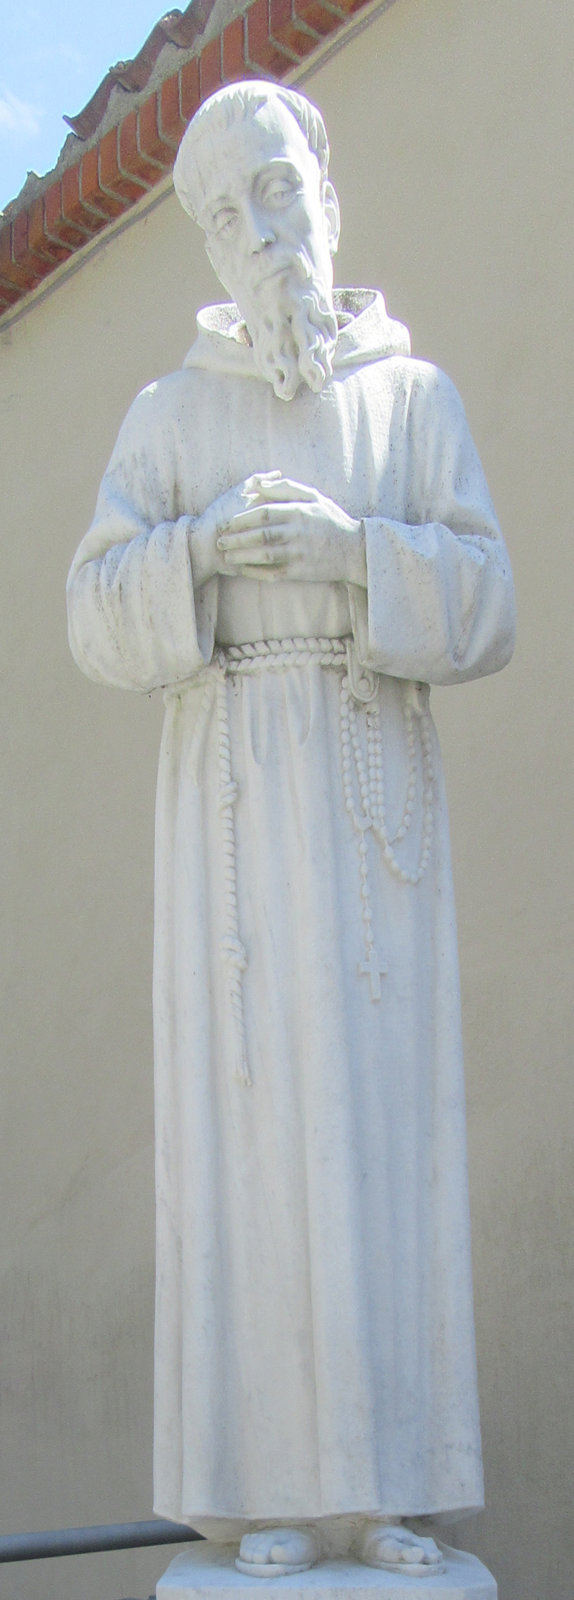 Statue vor dem Kloster in Piancogno